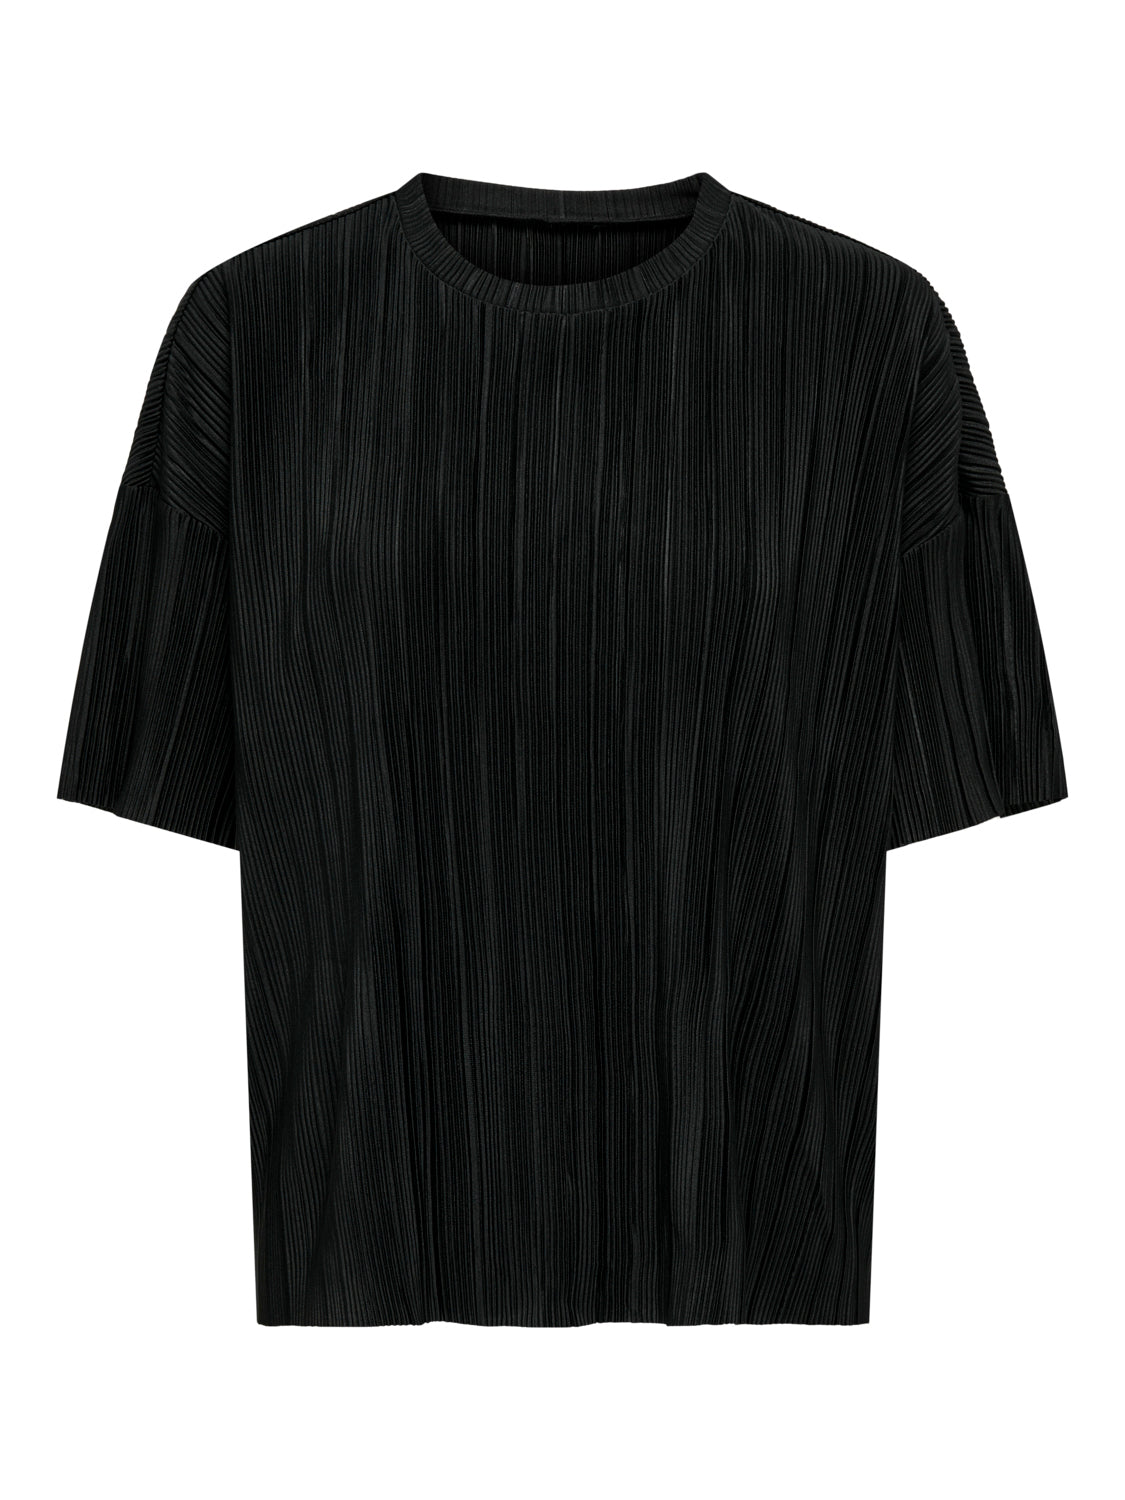 STURAVENNA T-Shirt - Black